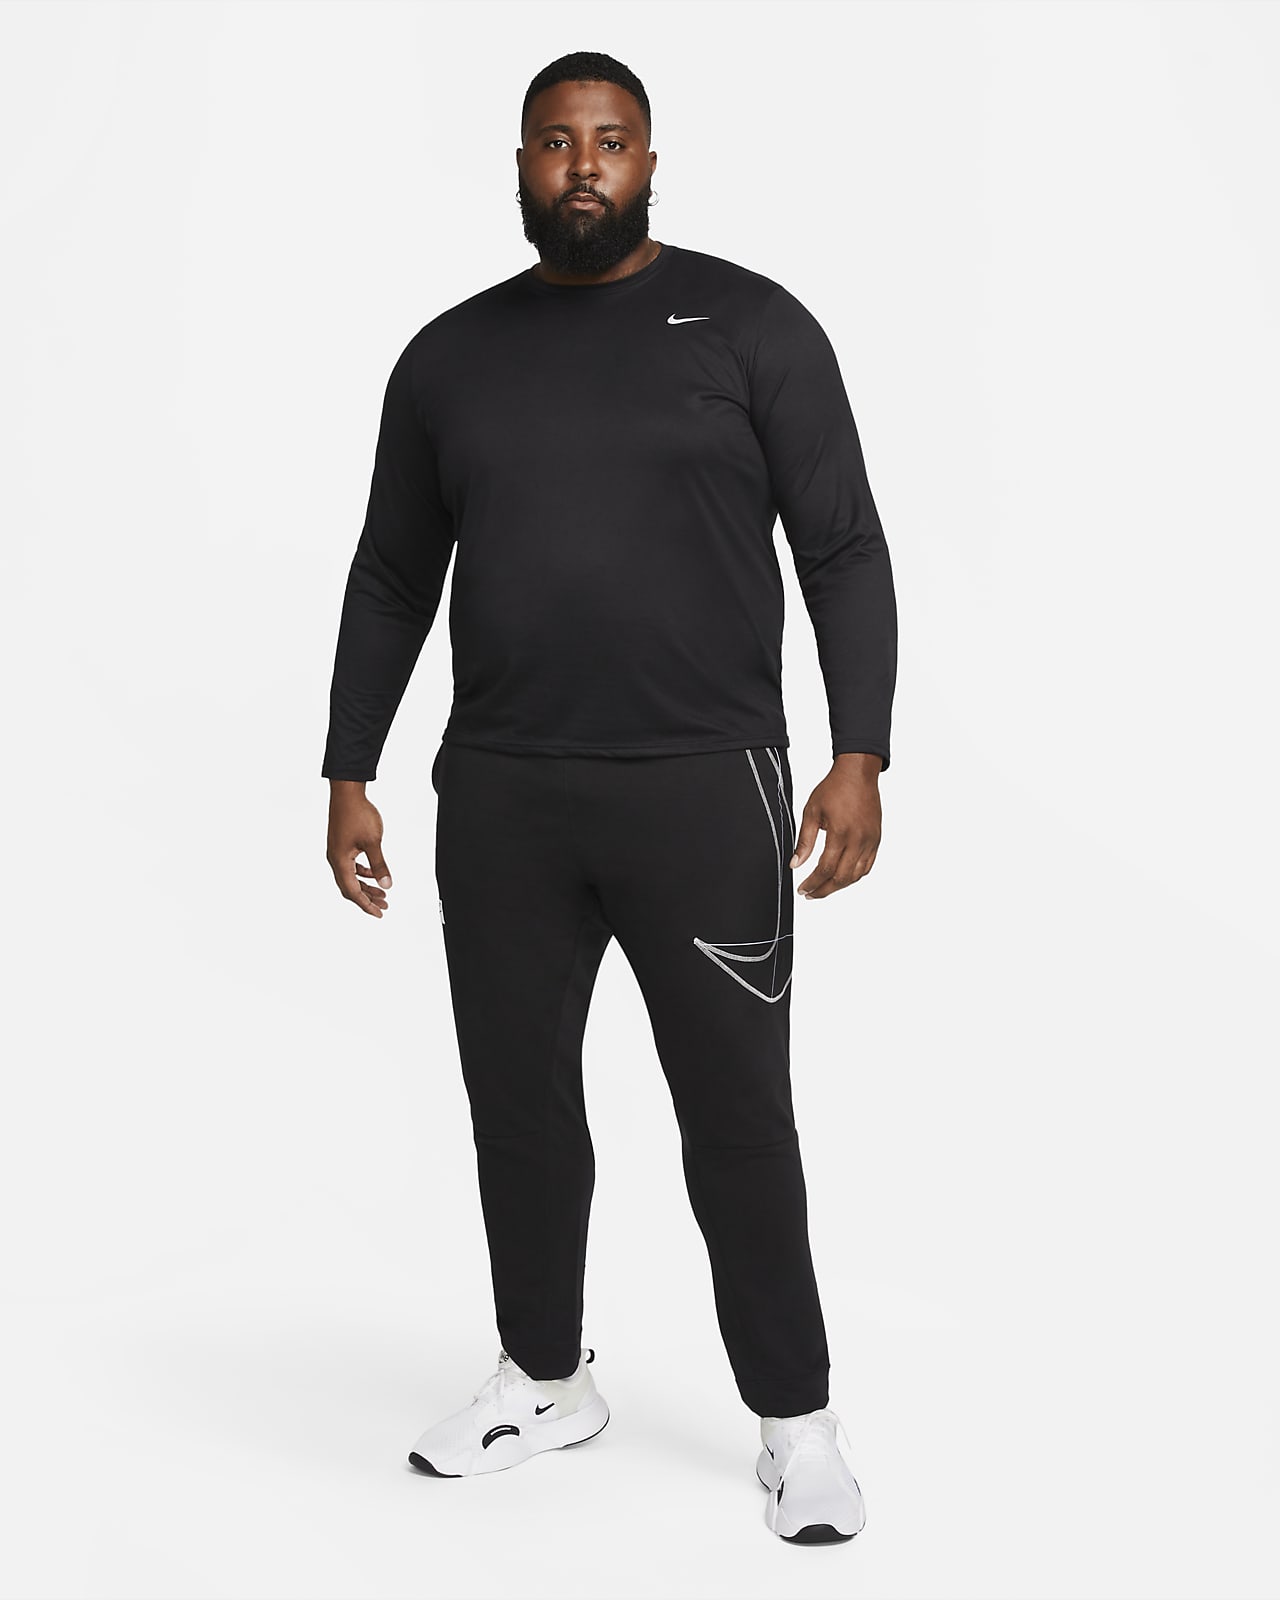 Nike Men's Dri-FIT Fleece Tapered Pants